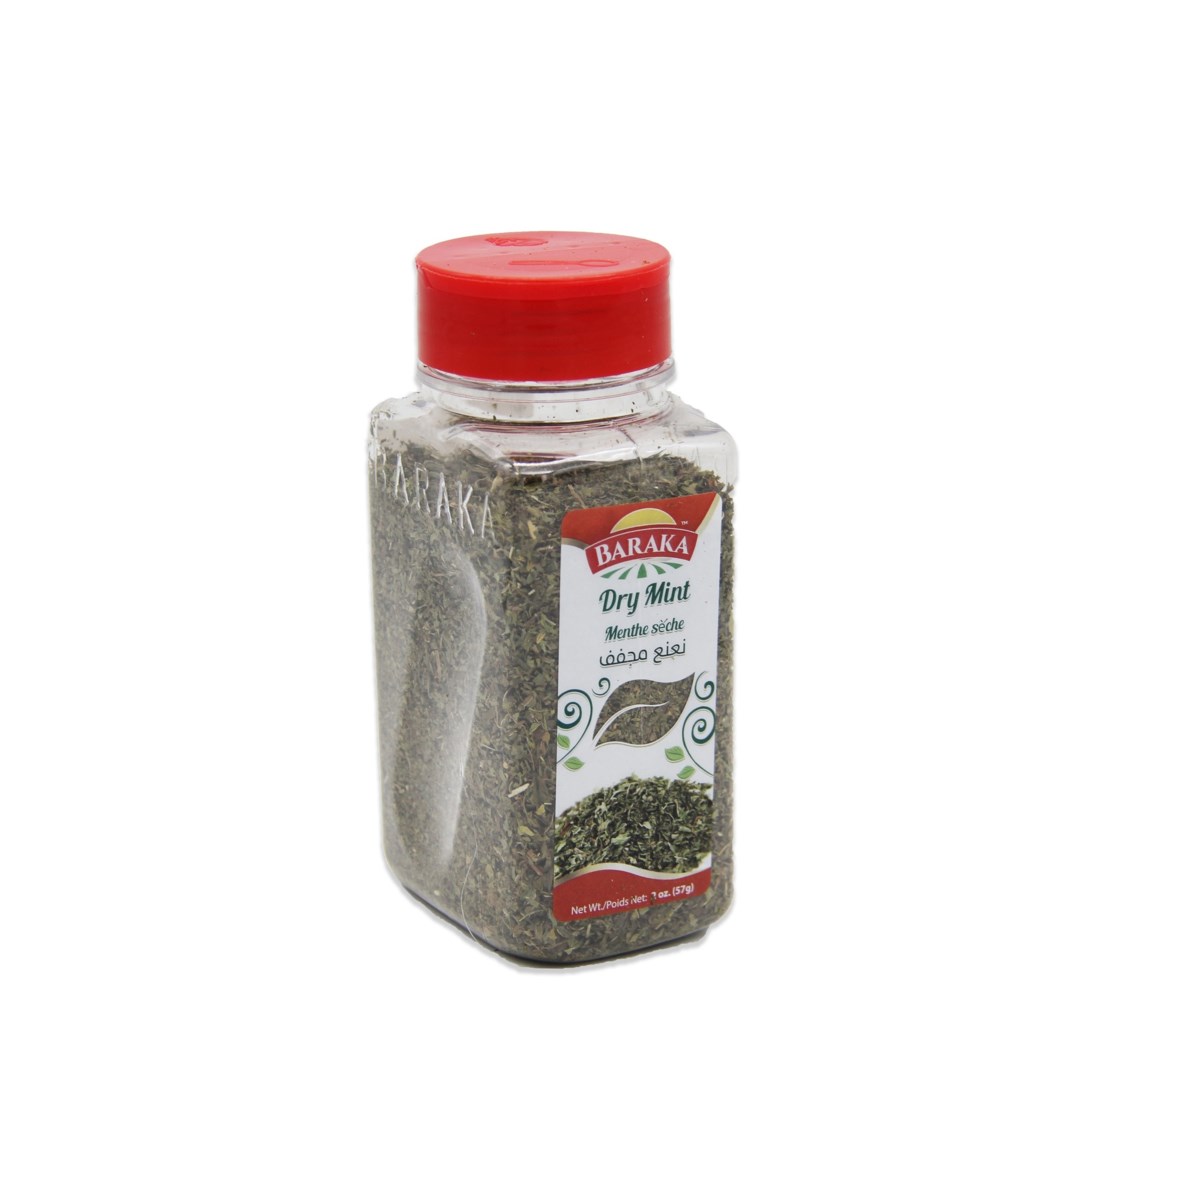 Dry Mint in Spice plastic tub "Baraka"  2 oz * 10